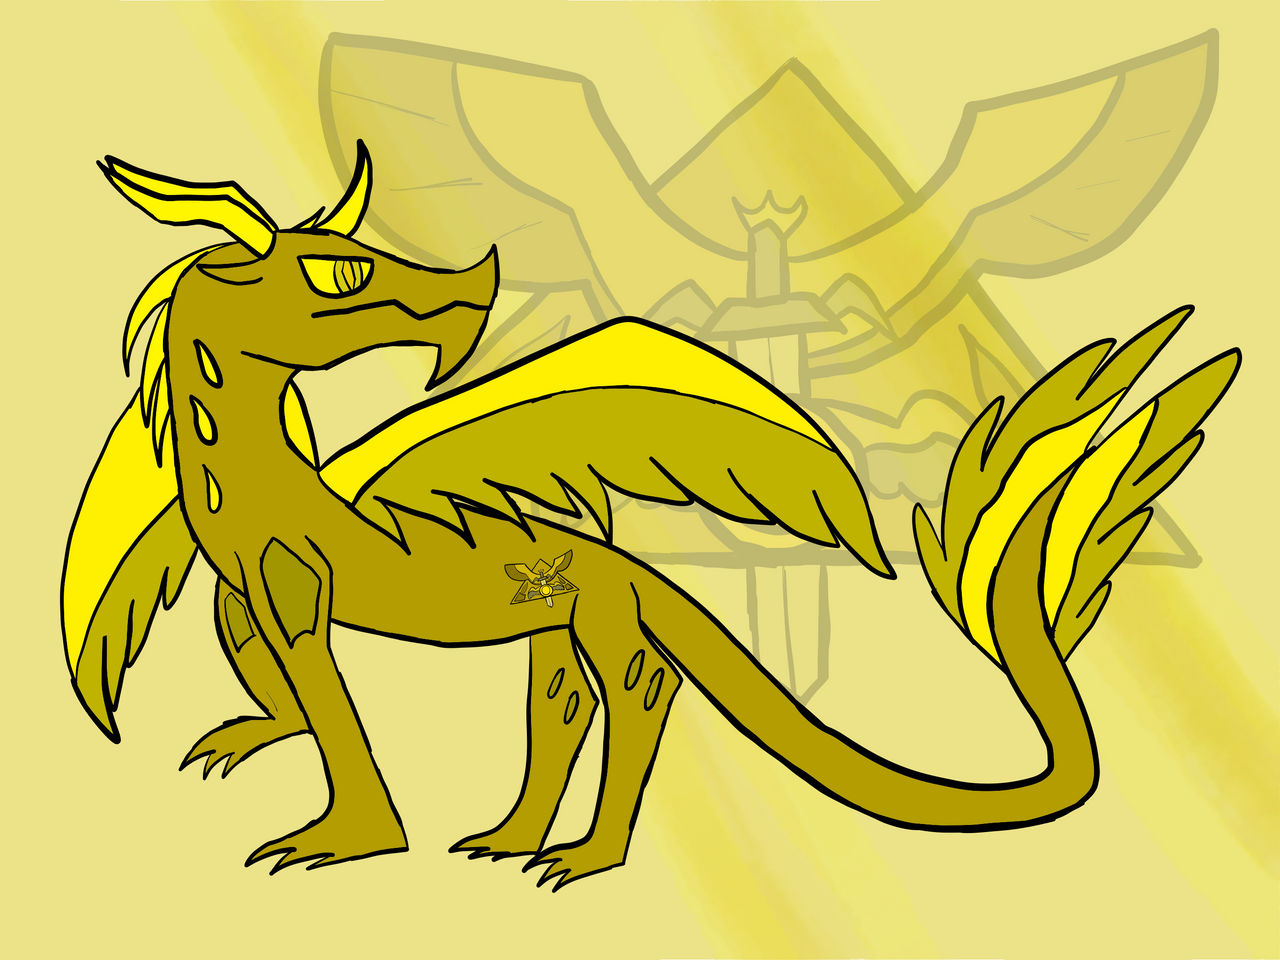 Golden Dragon by LunarNightDragon on DeviantArt